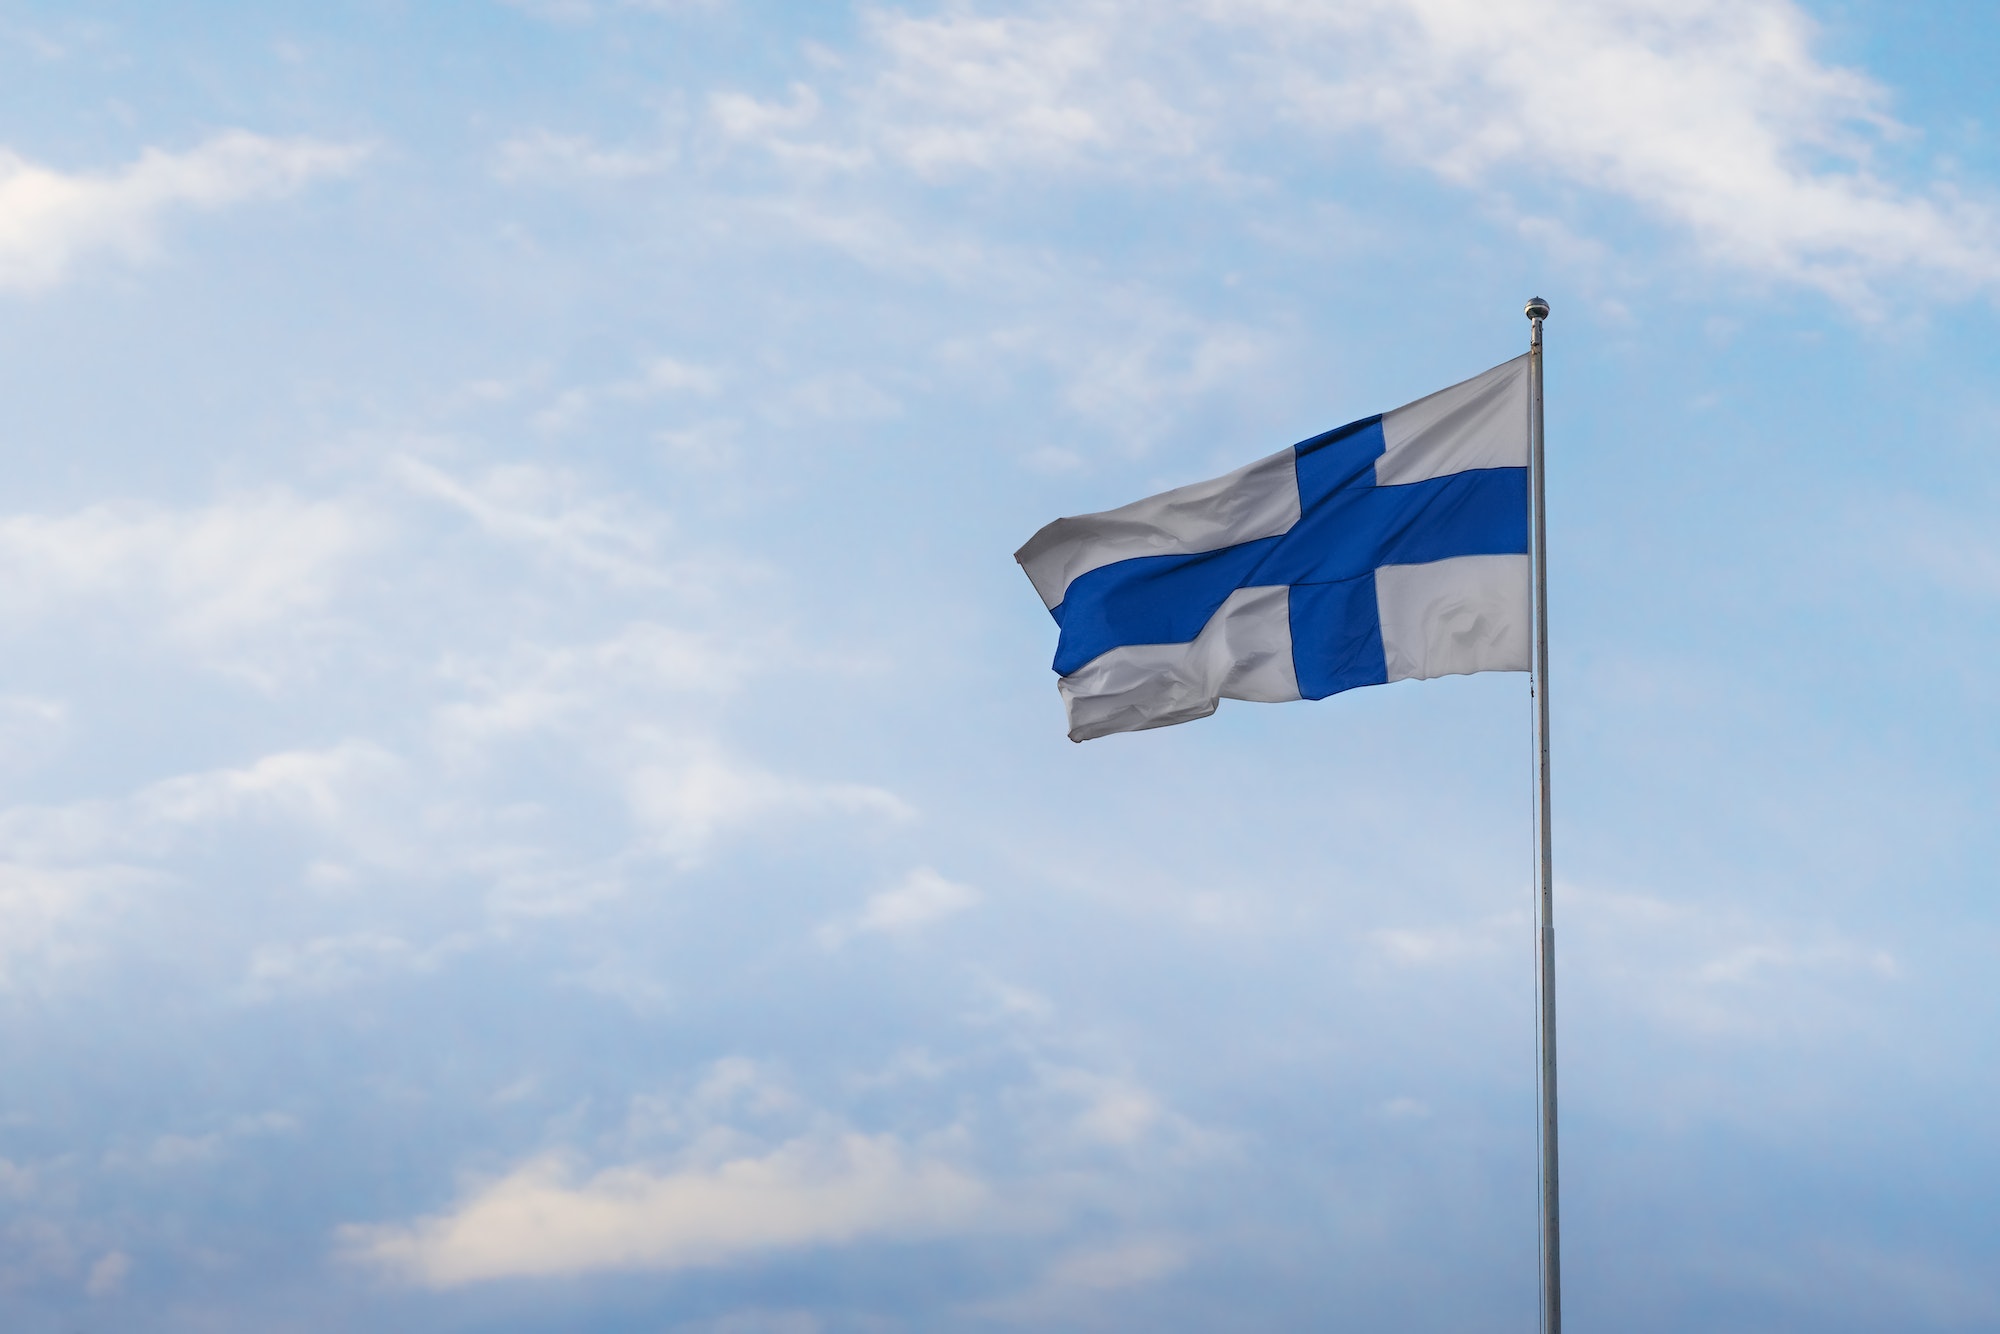 Finnish Flag - National Flag of Finland on a blue sky - Helsinki, Finland